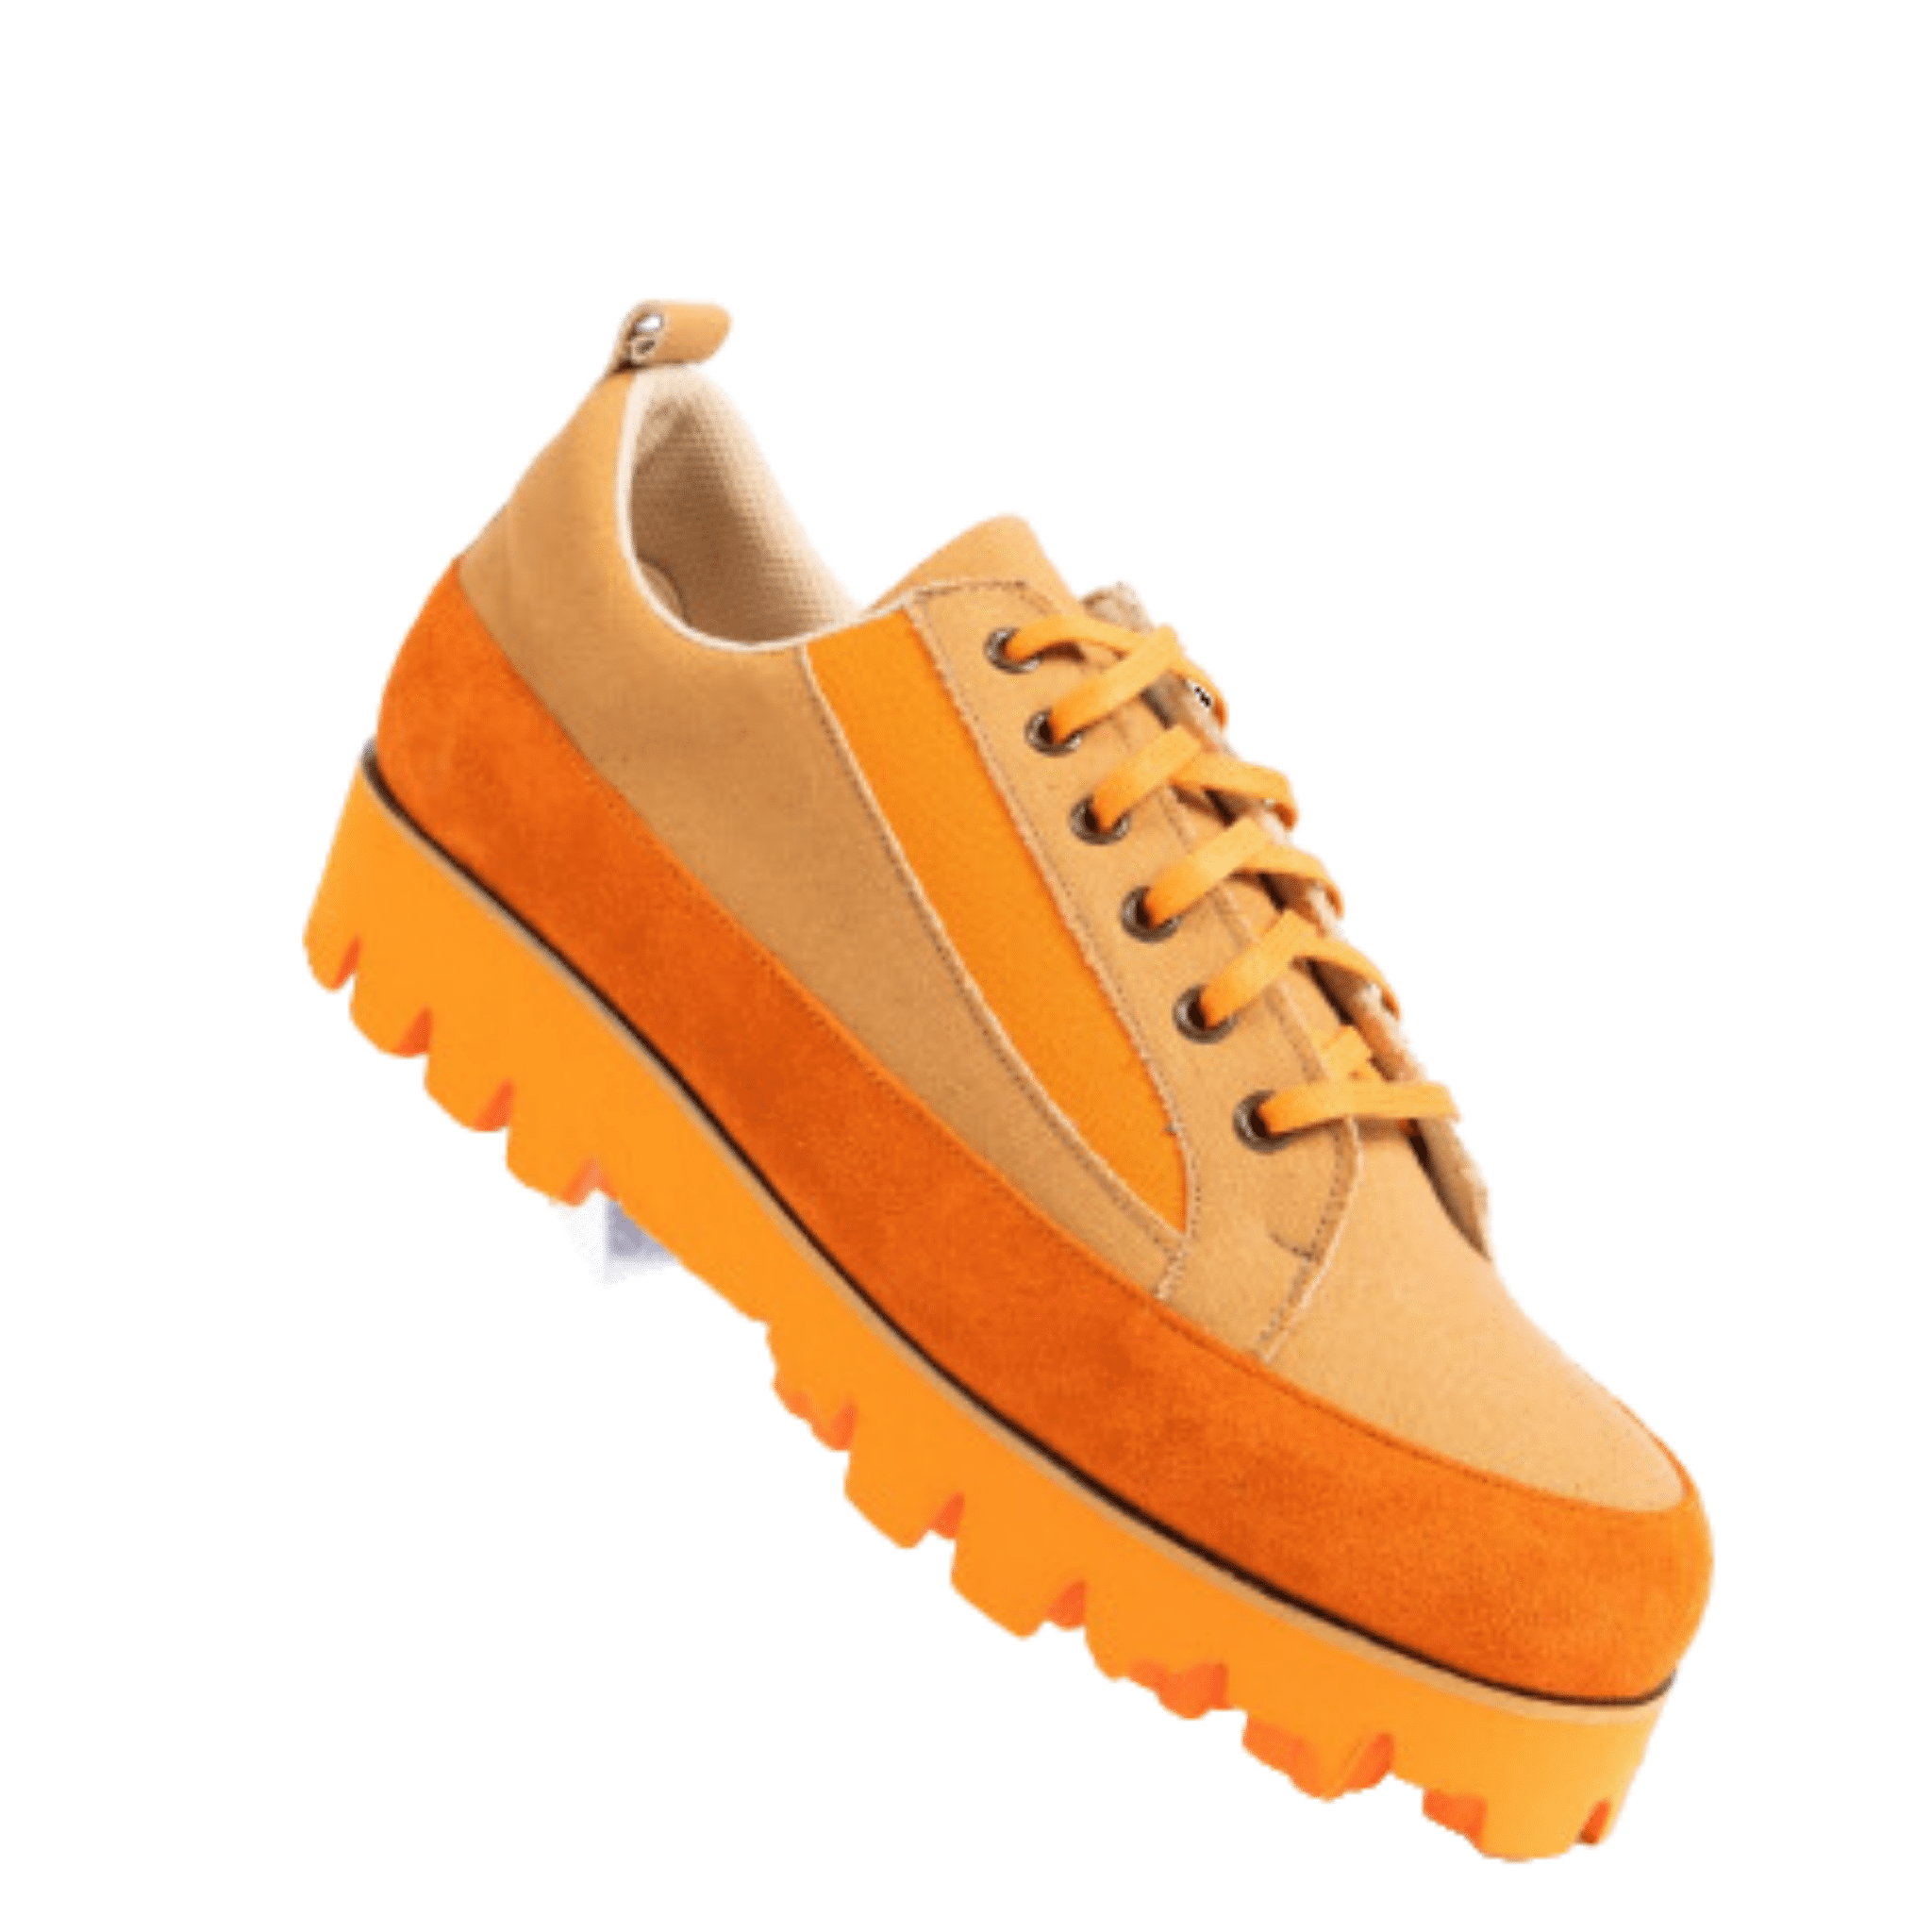 orange canvas suede sneaker large sizes